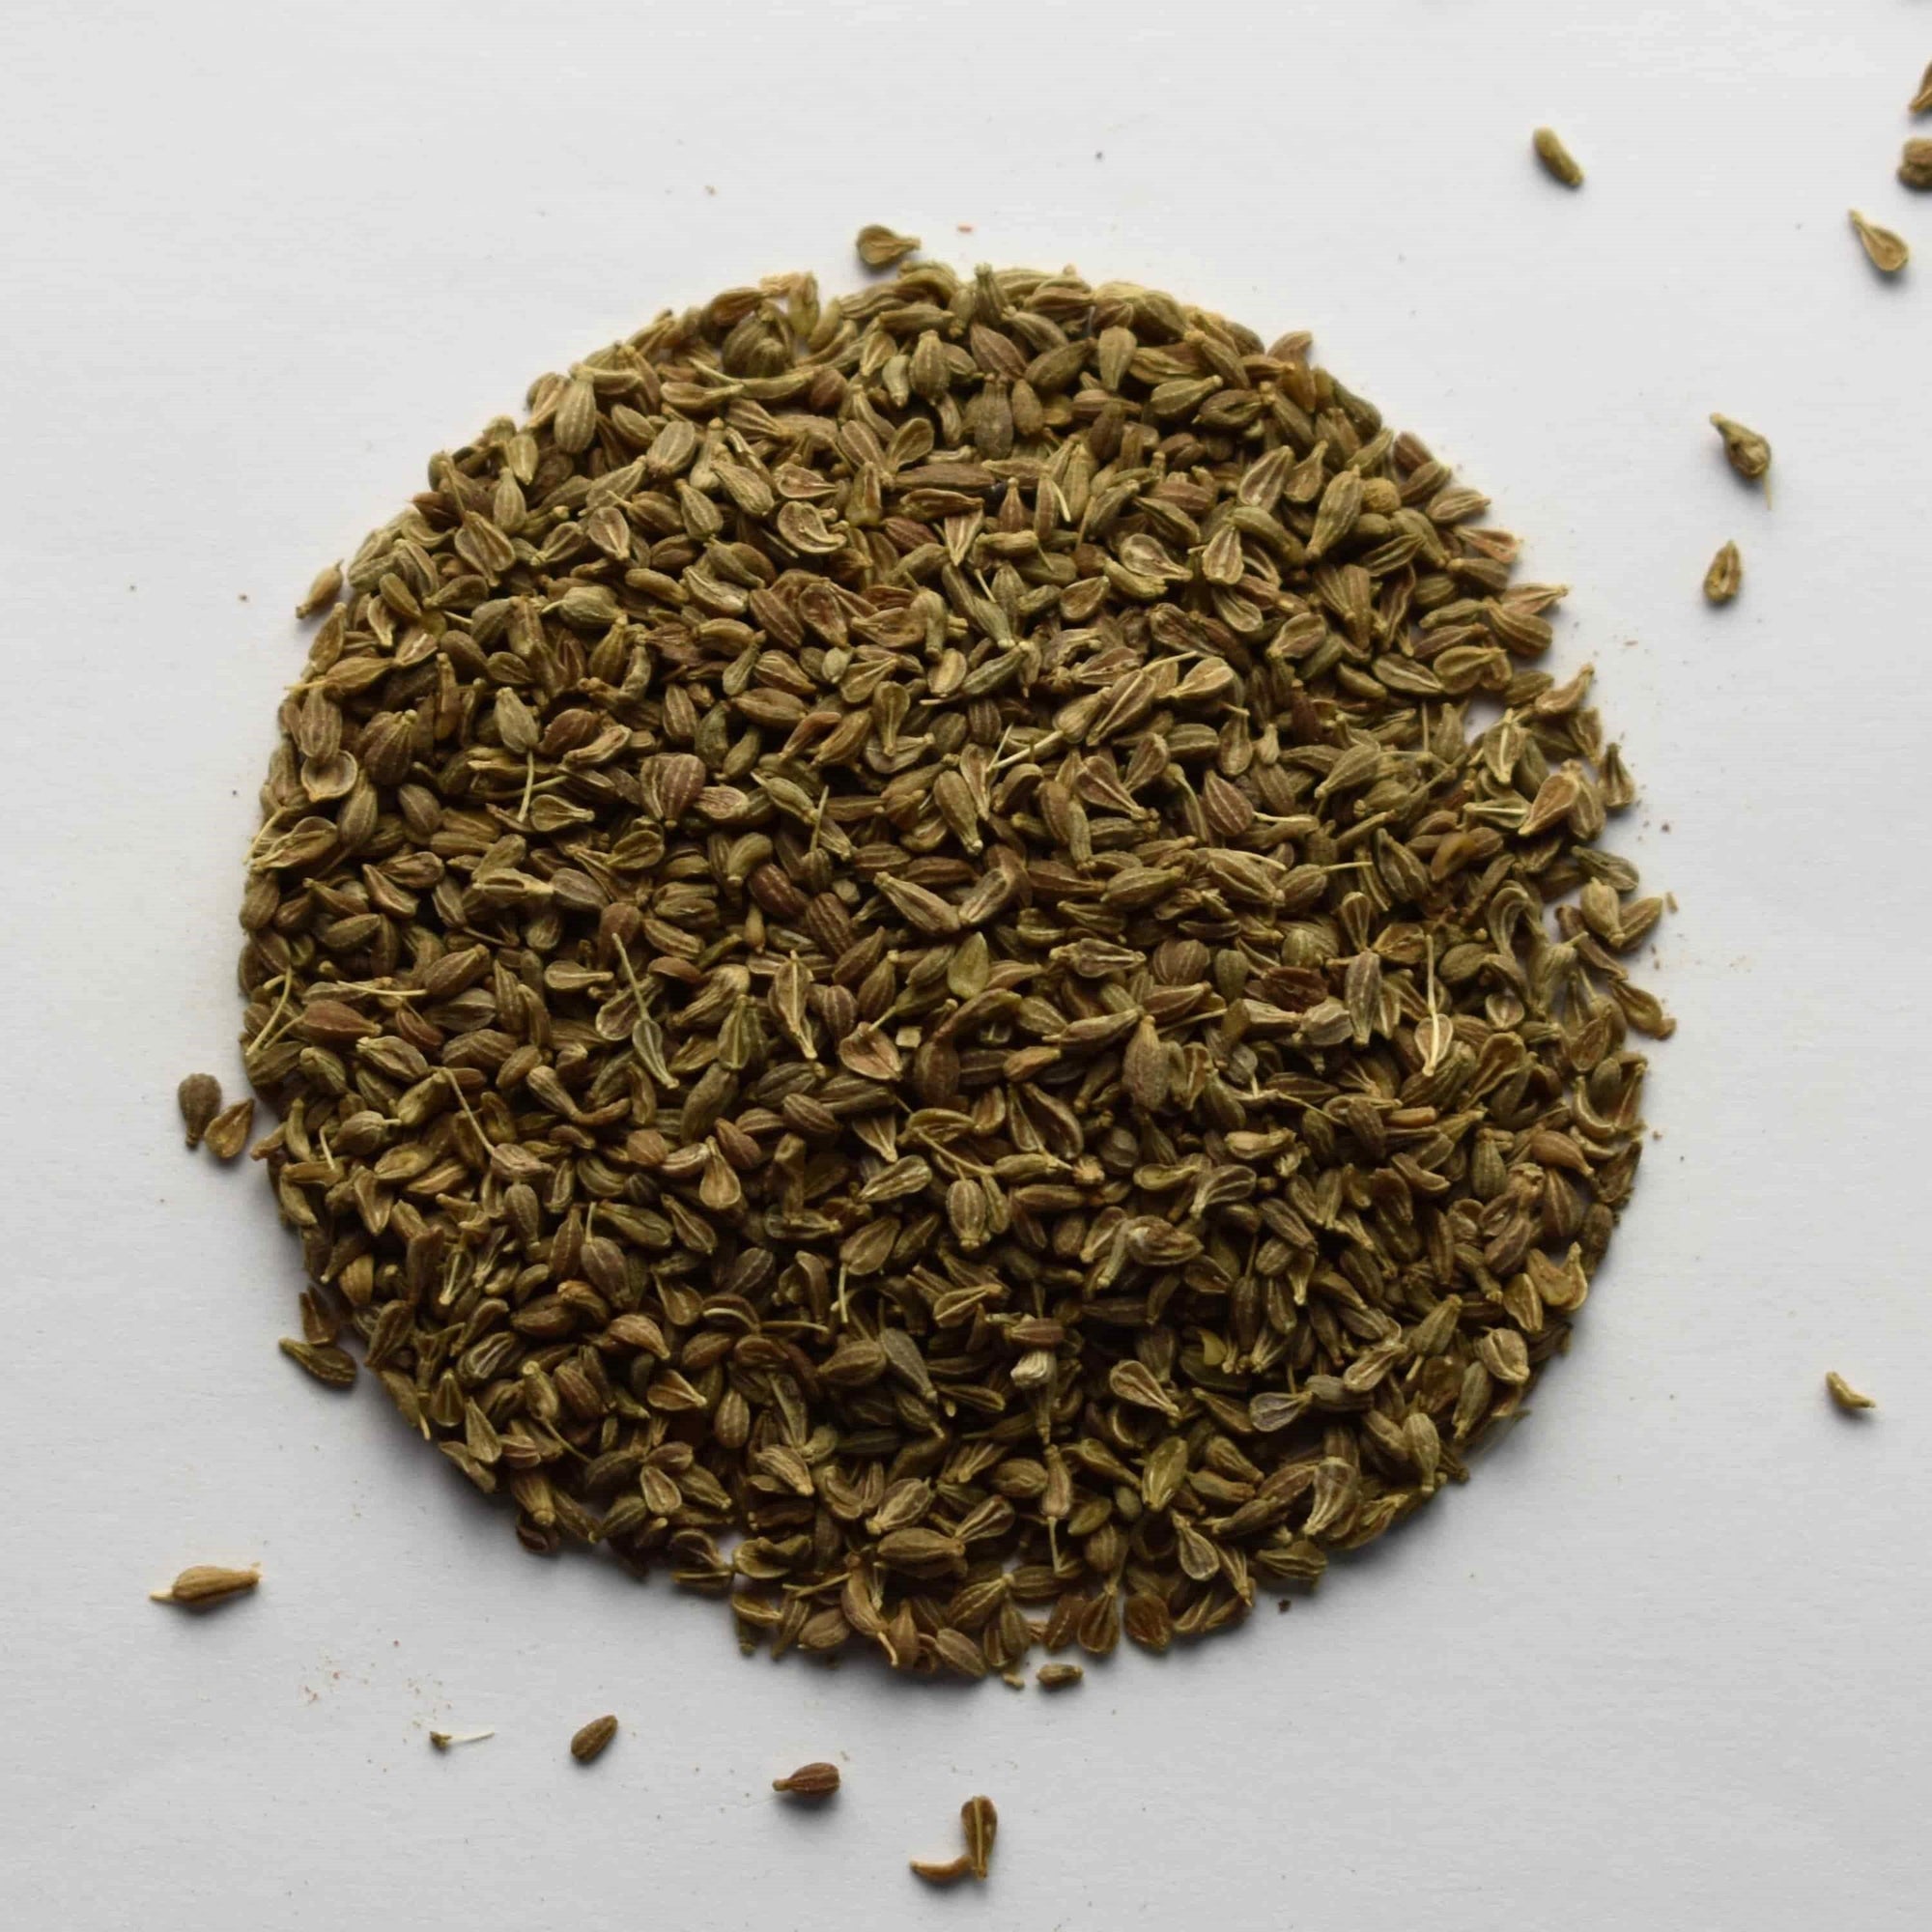 Anise Seed - The Tea & Spice Shoppe